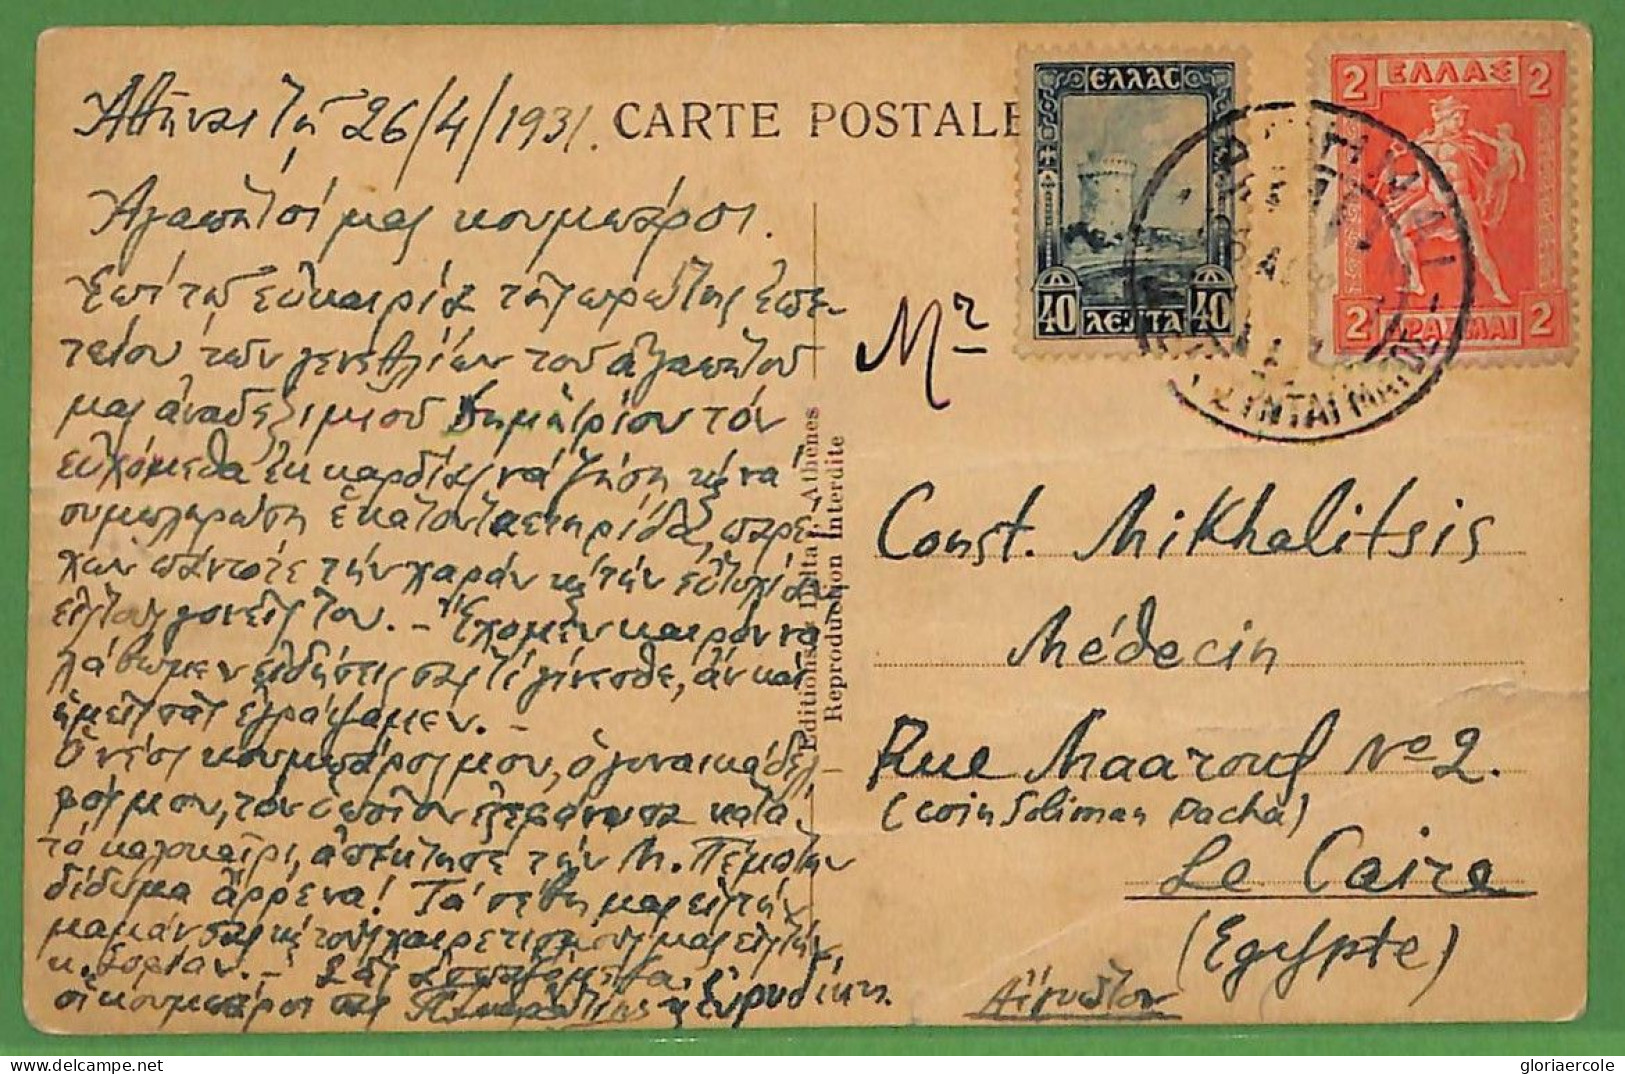 Ad0909 - GREECE - Postal History -  POSTCARD To CAIRO Egypt  1931 - Briefe U. Dokumente